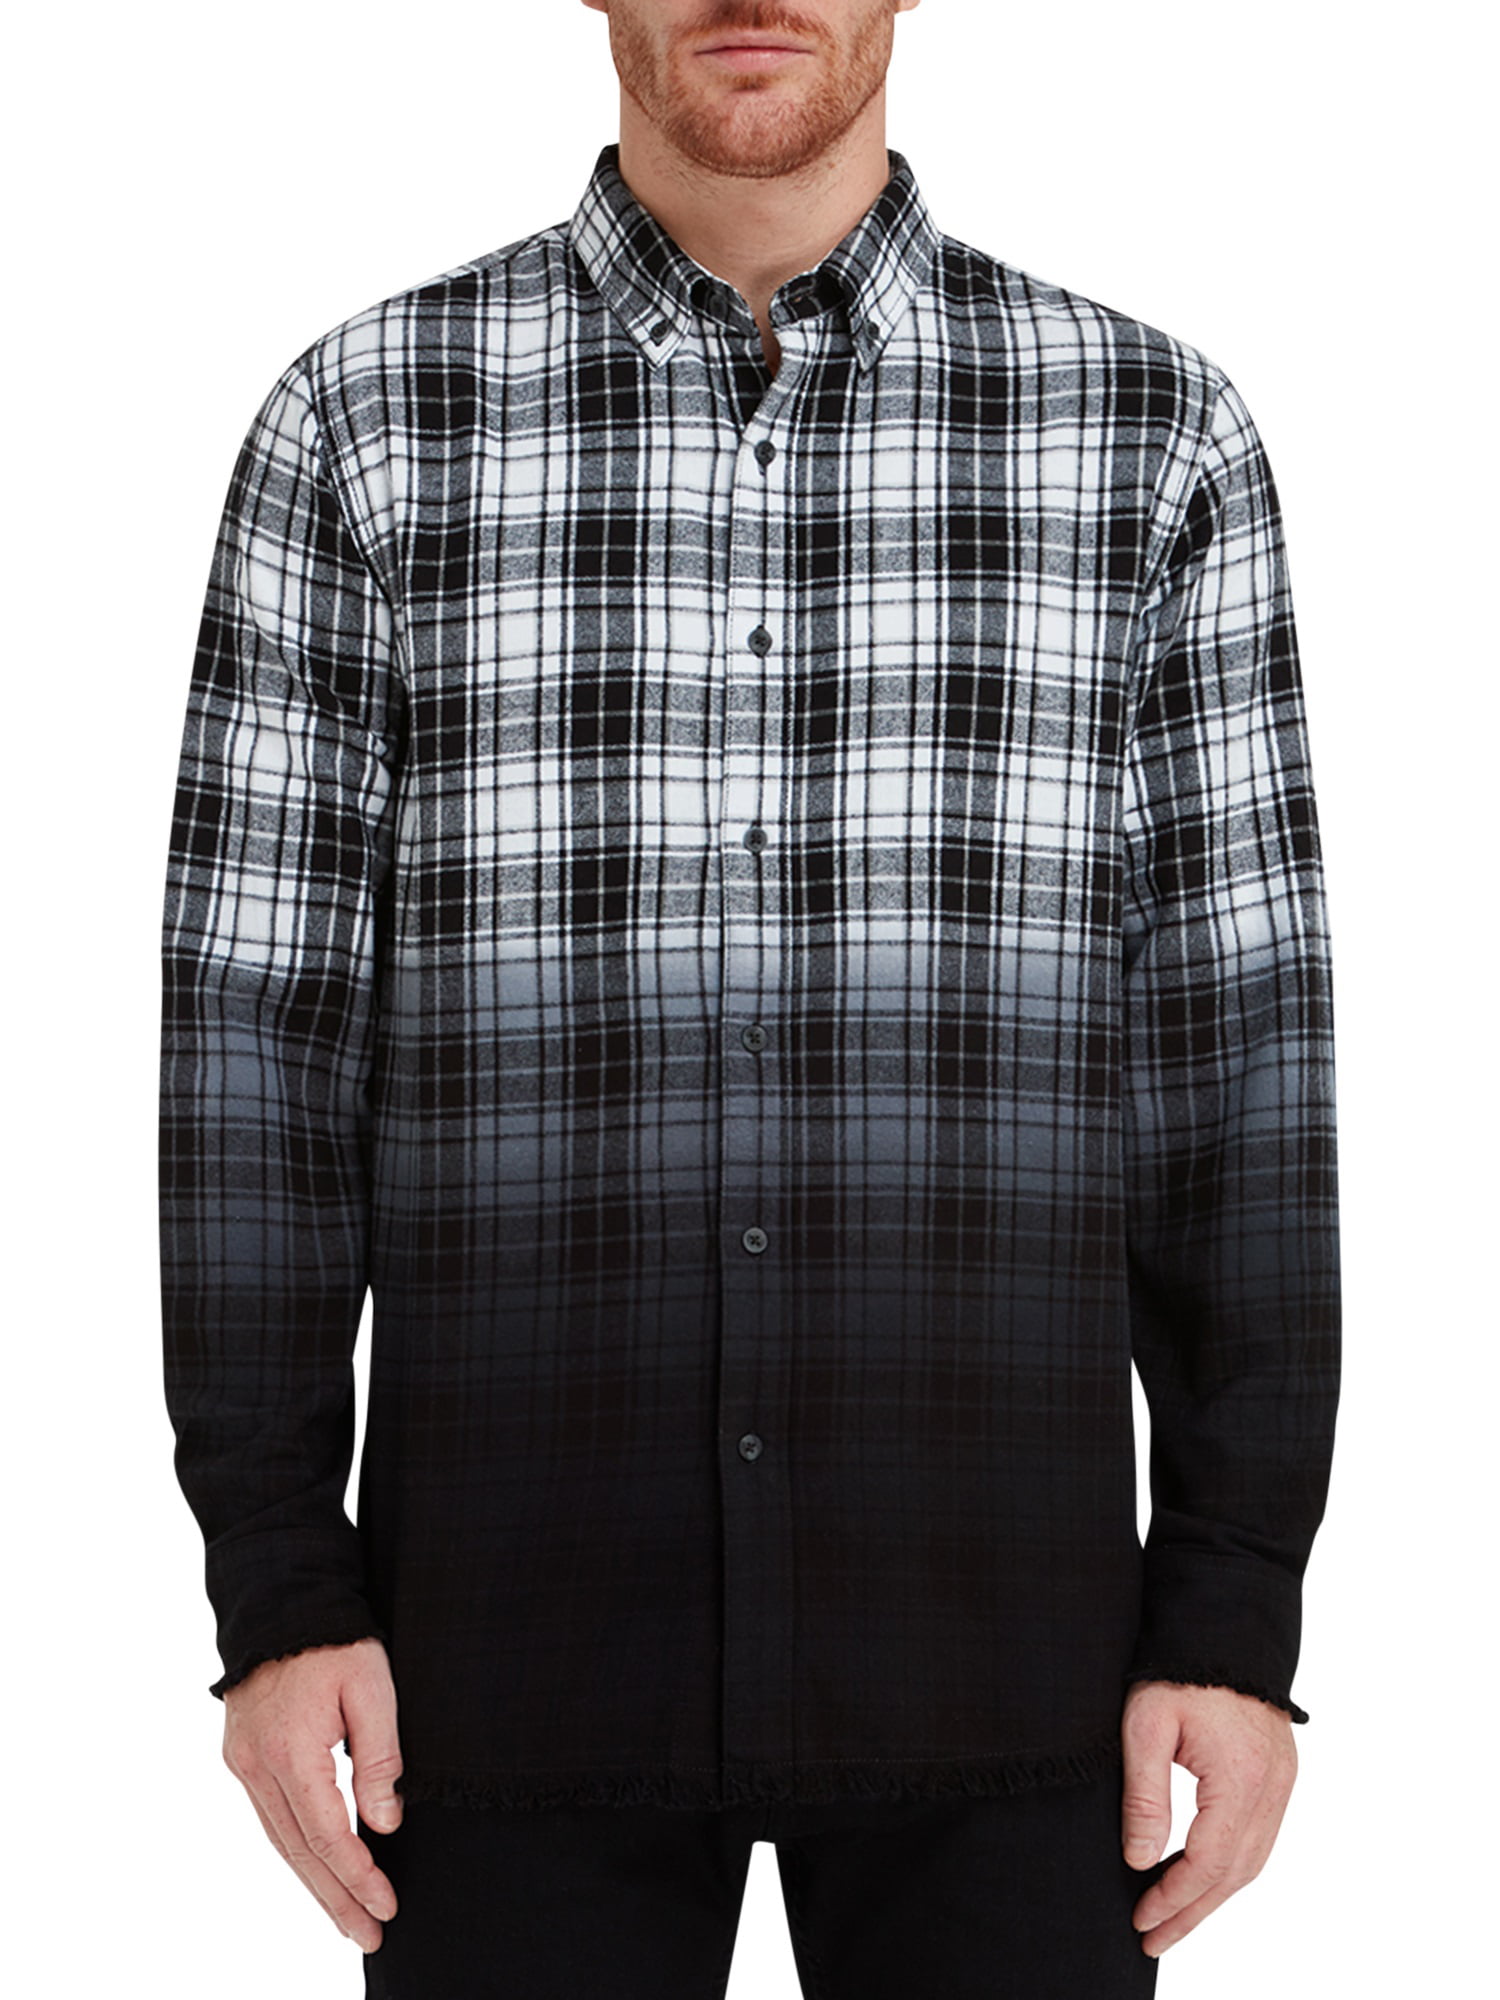 Mens Corduroy Long Sleeve Shirts Cotton Jacksouth Jacket Causal Shirt Top S-2XL